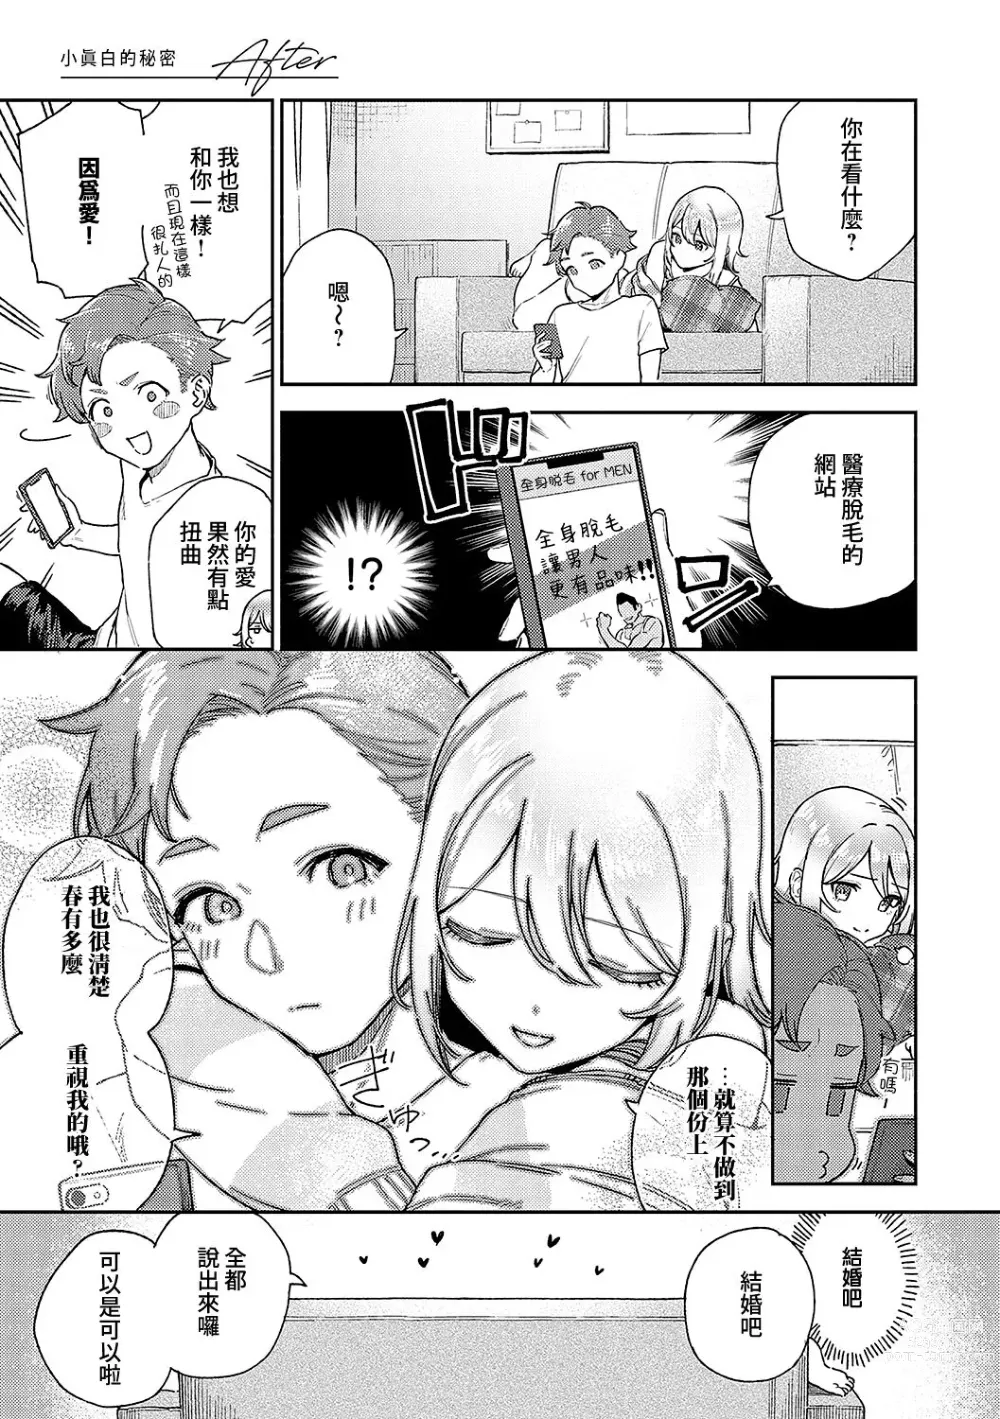 Page 4 of manga Bitter Sweet Complex 作品後記